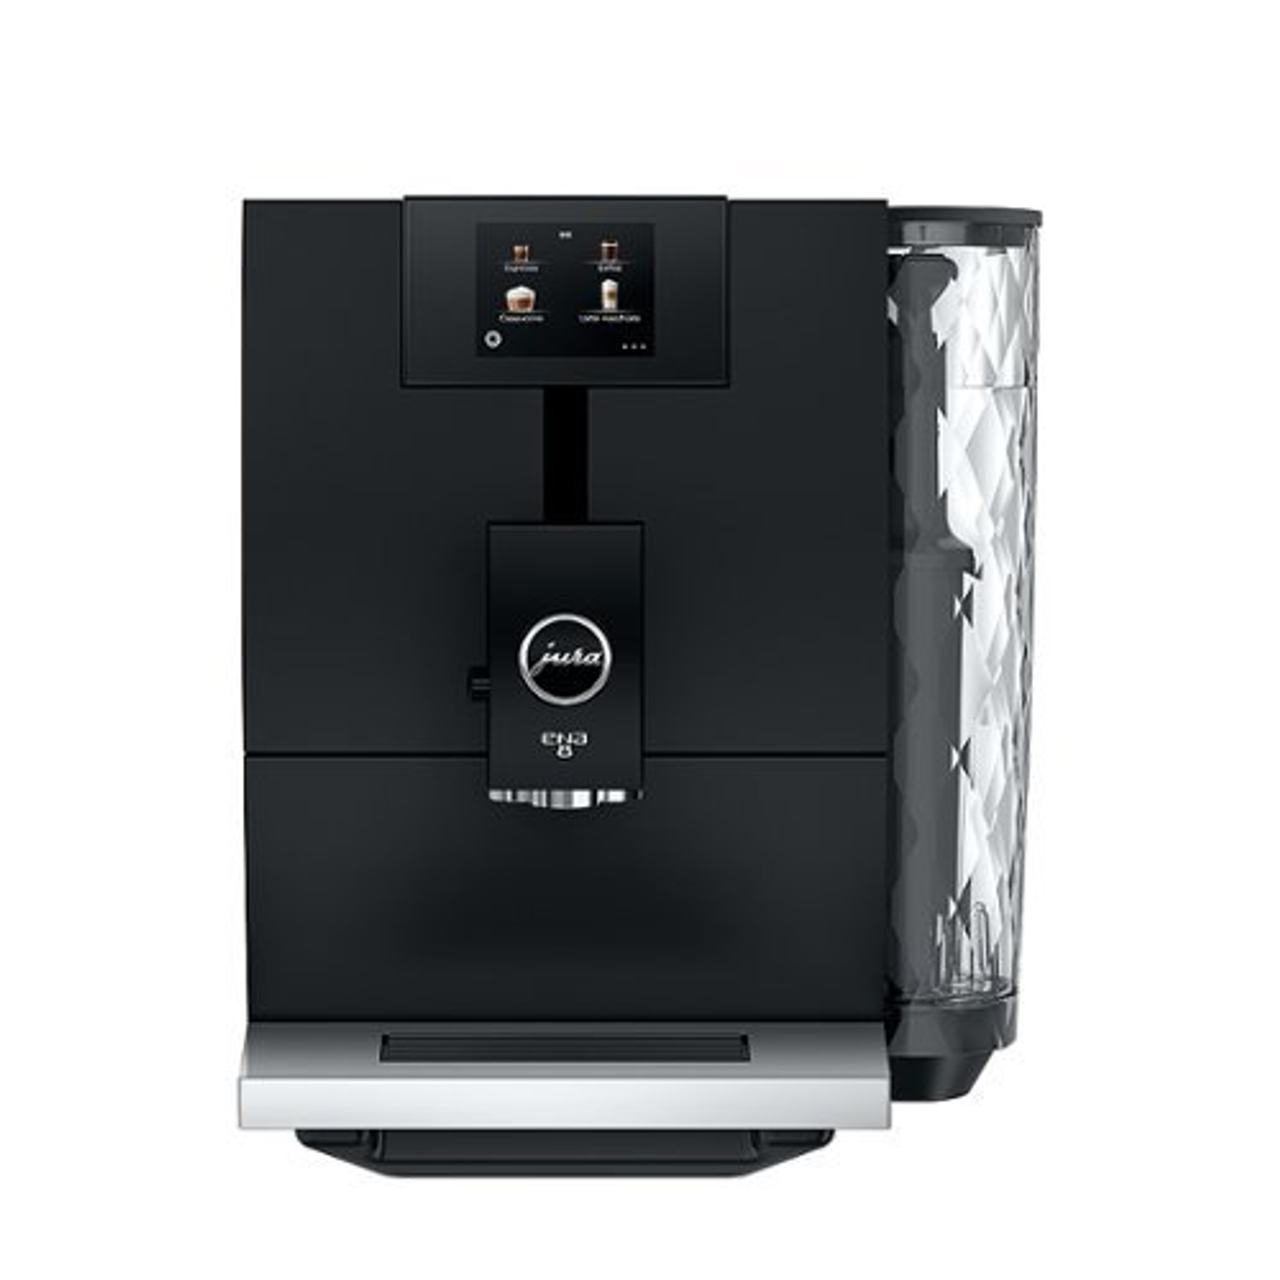 Jura - ENA 8 Touchscreen Automatic Coffee Machine with 15 Coffee Specialty Drinks - Full Metropolitan Black